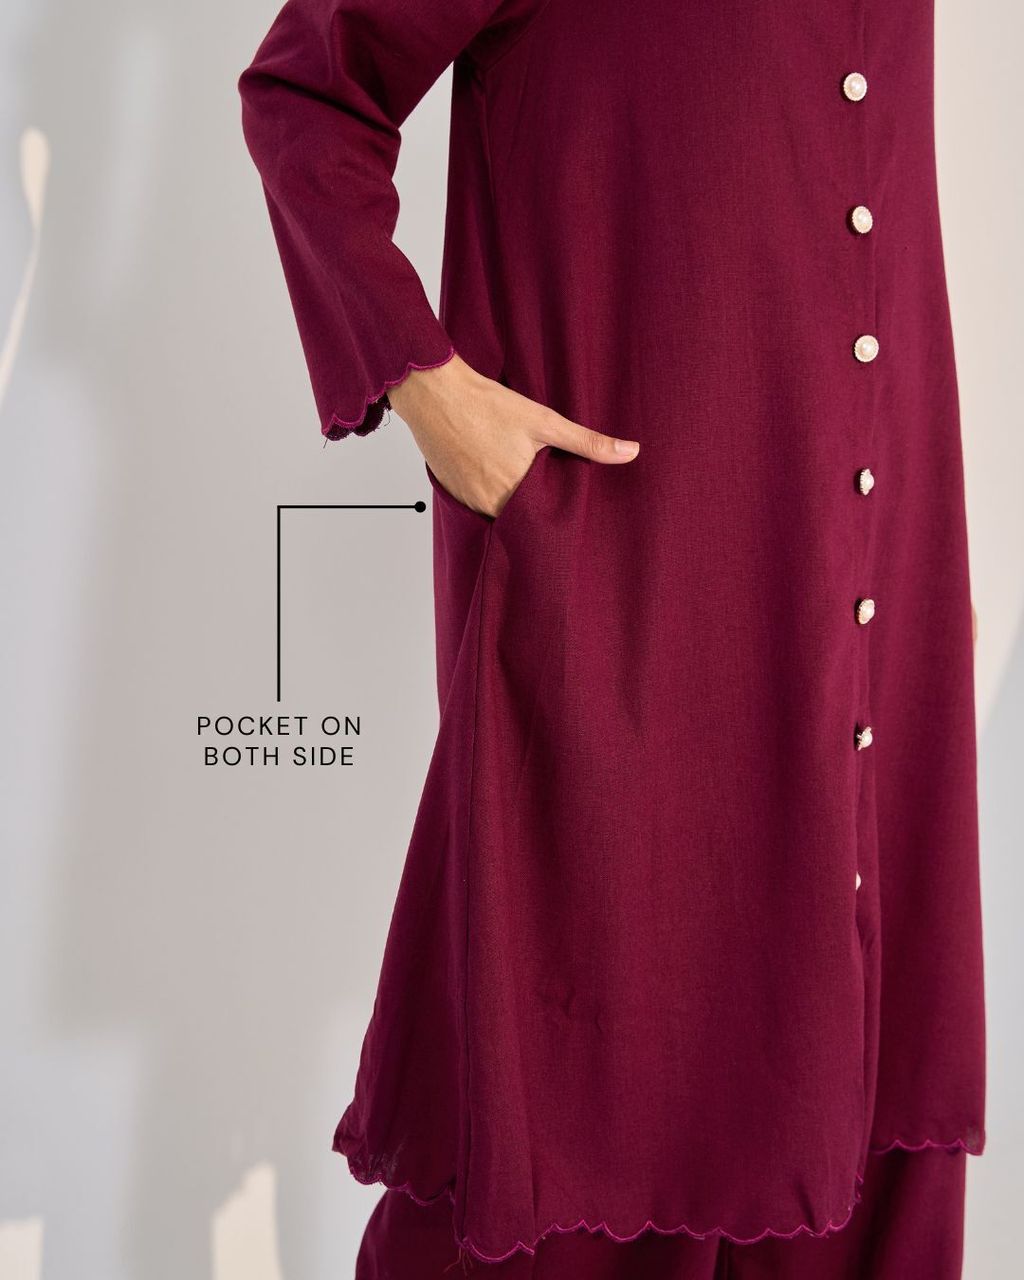 haura-wear-cotton-baju-muslimah-set-seluar-set-skirt-suit-muslimah-set-baju-dan-seluar-muslimah-palazzo (22)